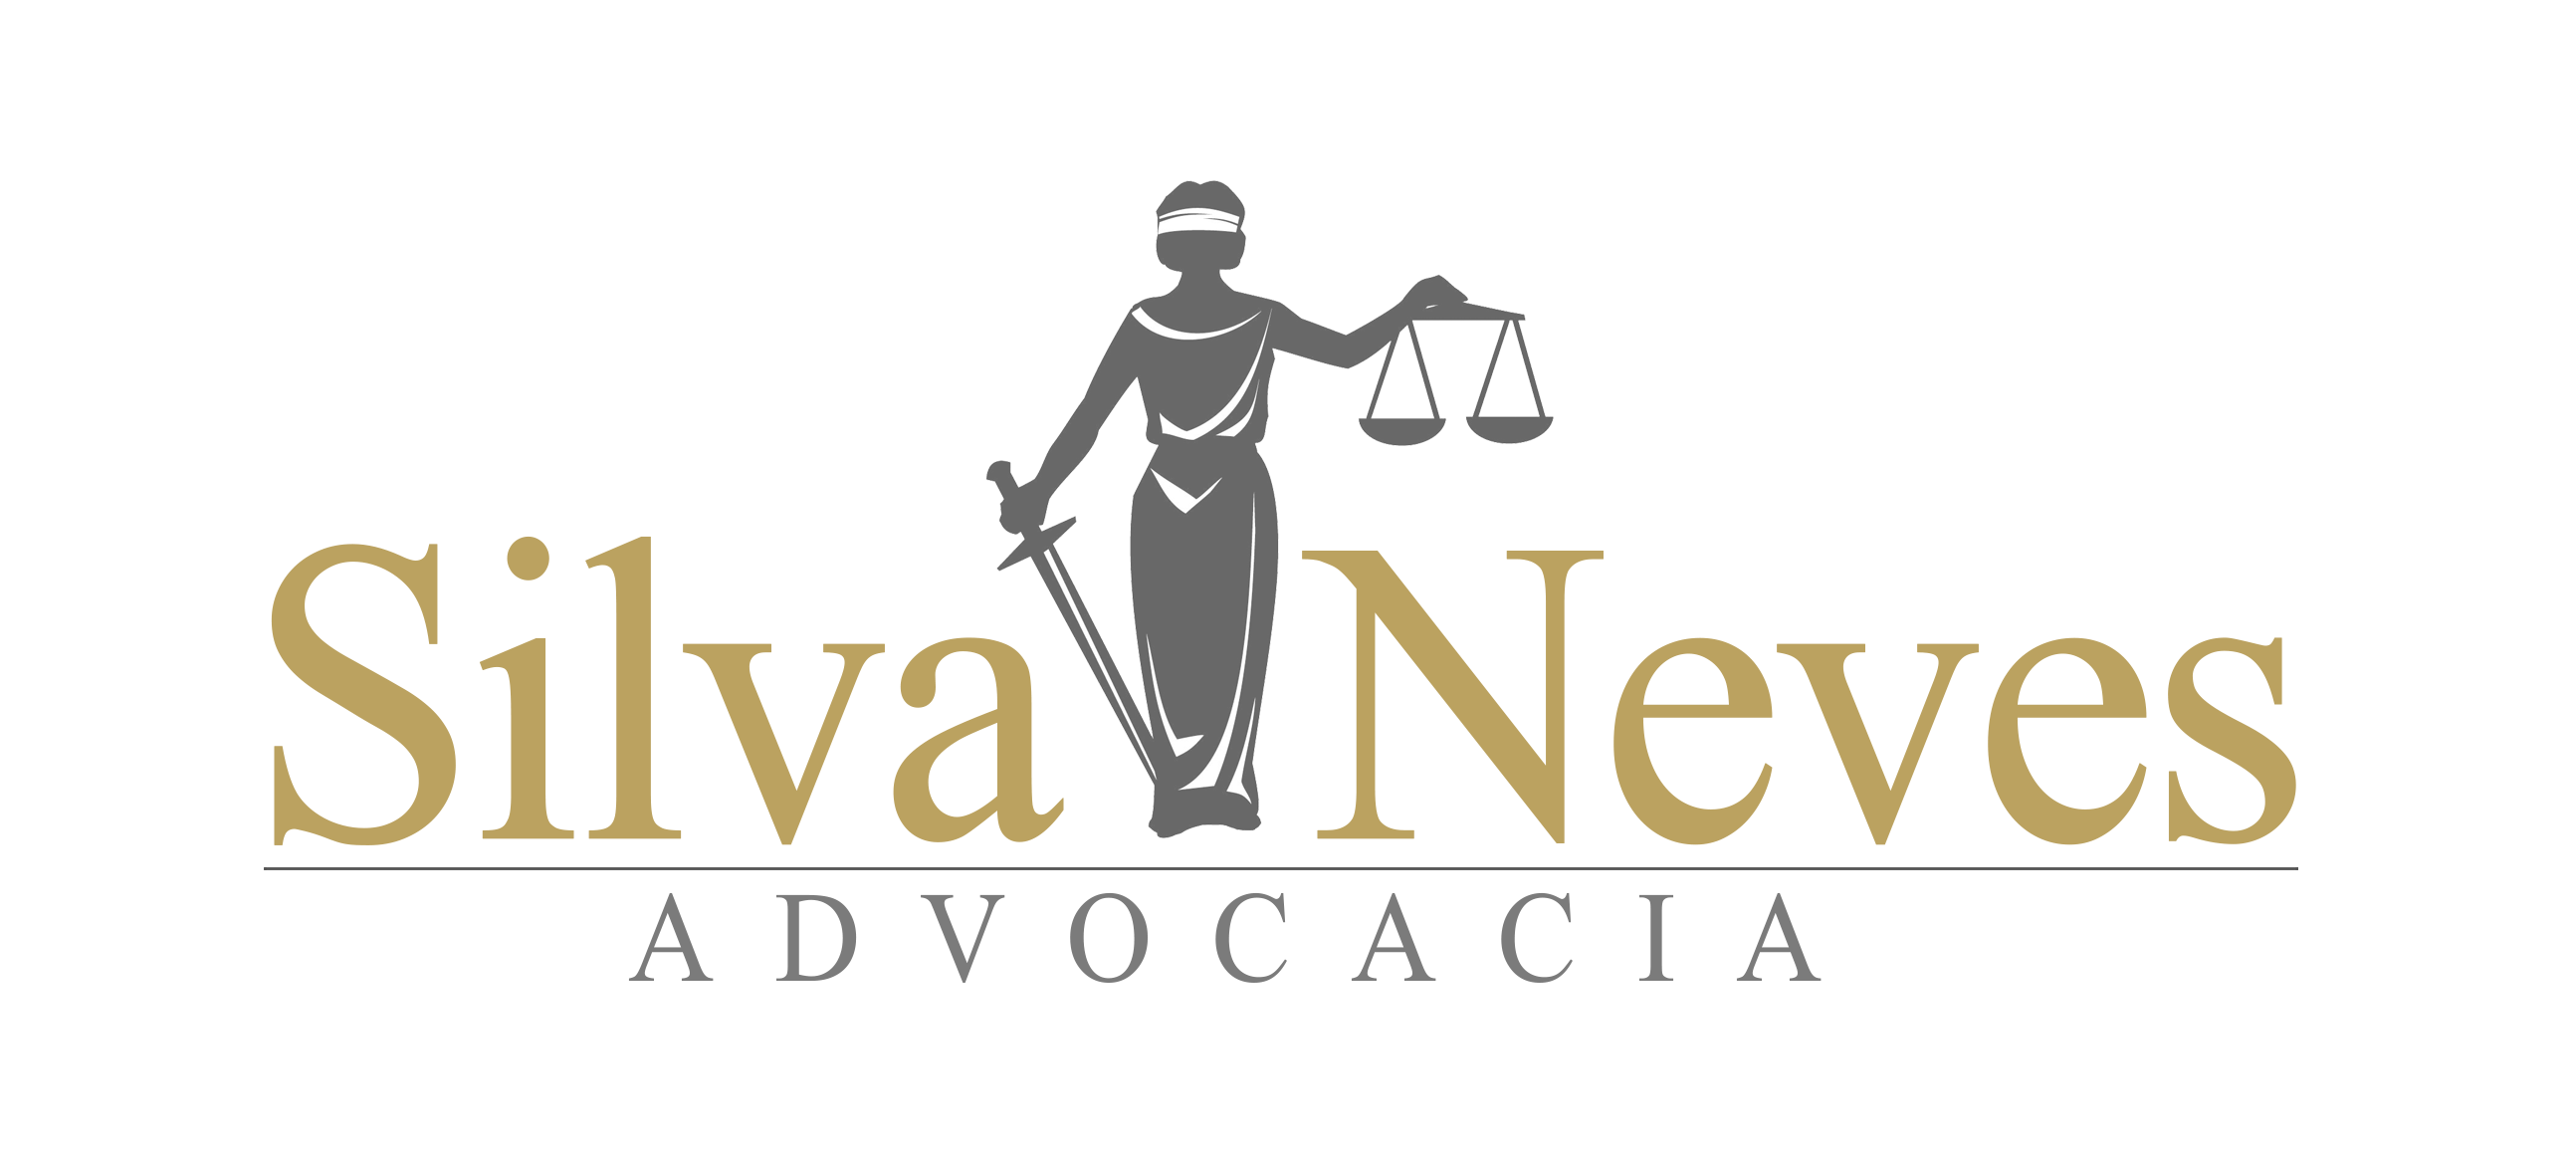 Silva Neves Advocacia